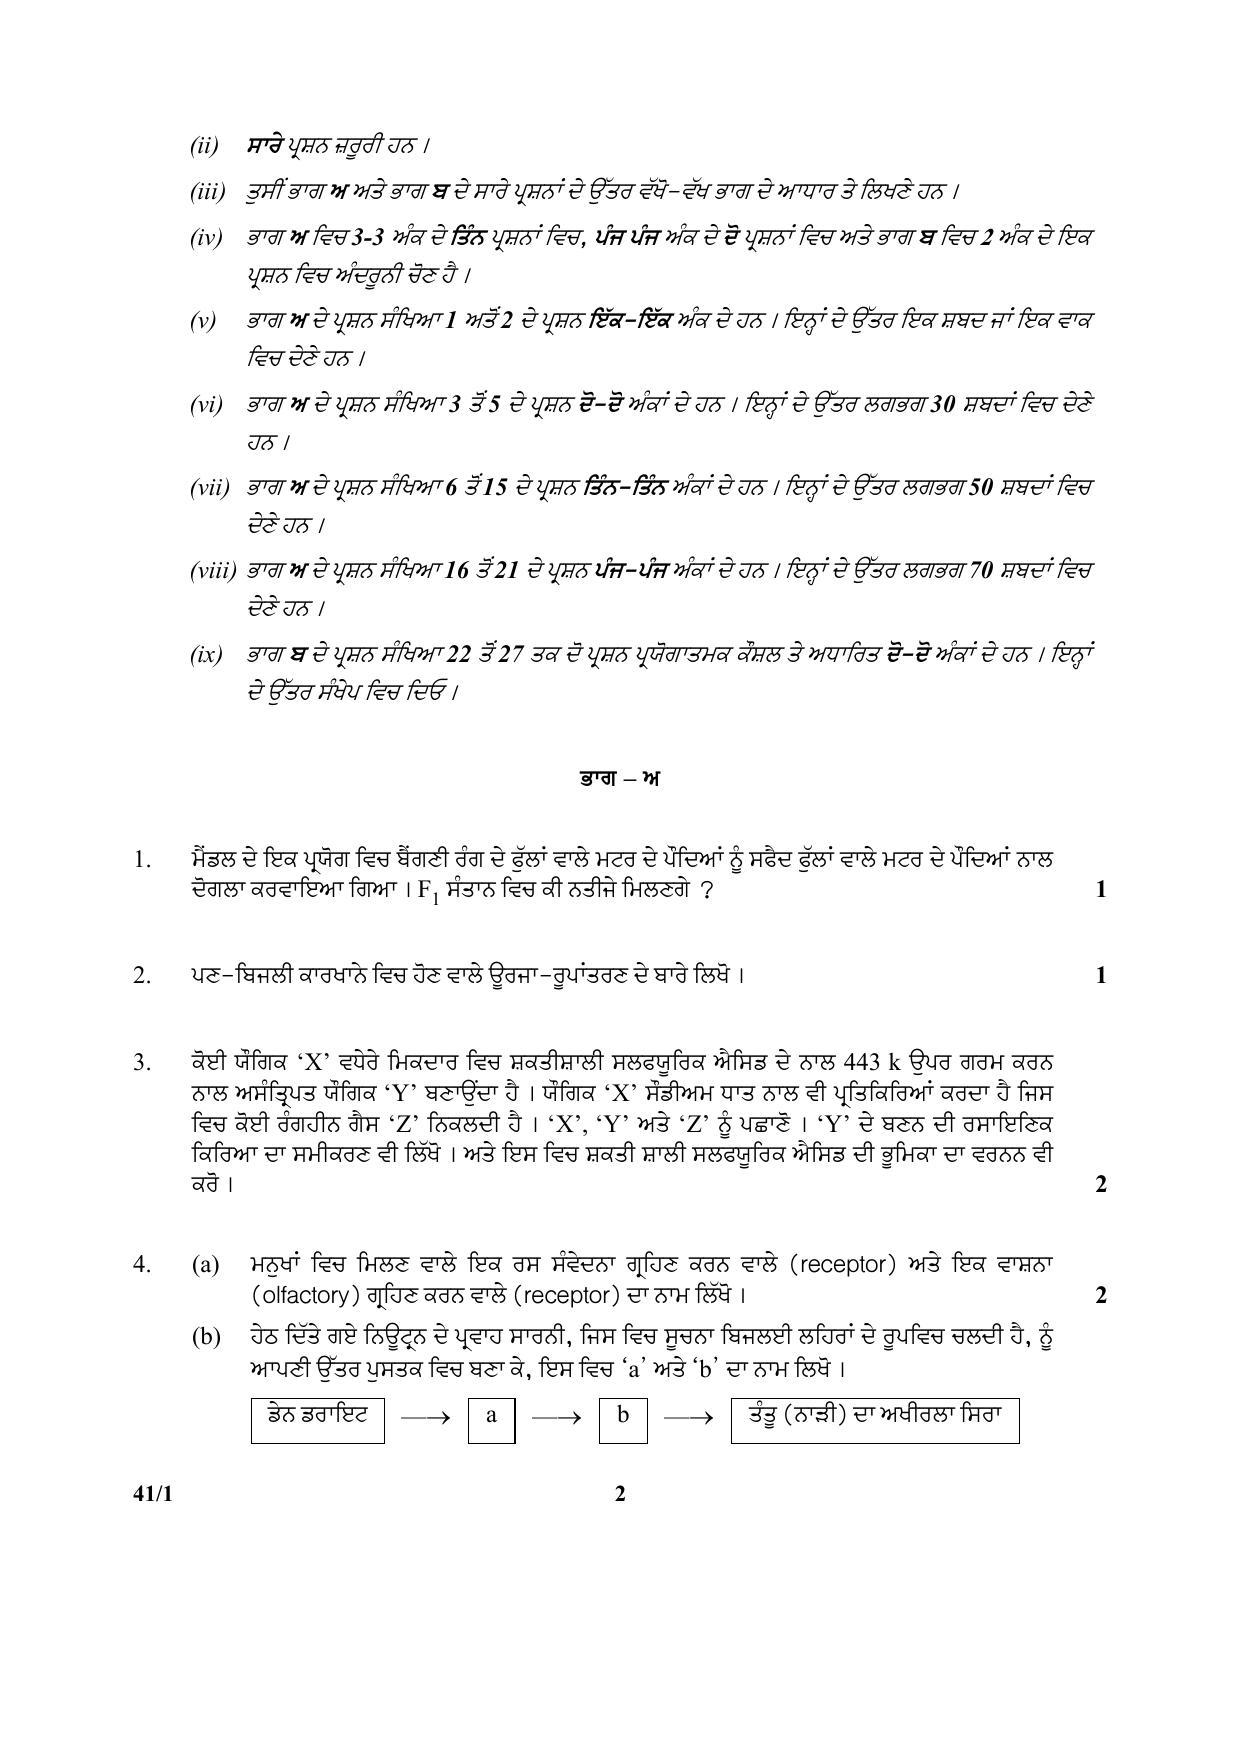 CBSE Class 10 41-1 (Science)_Punjabi 2018 Question Paper - Page 2